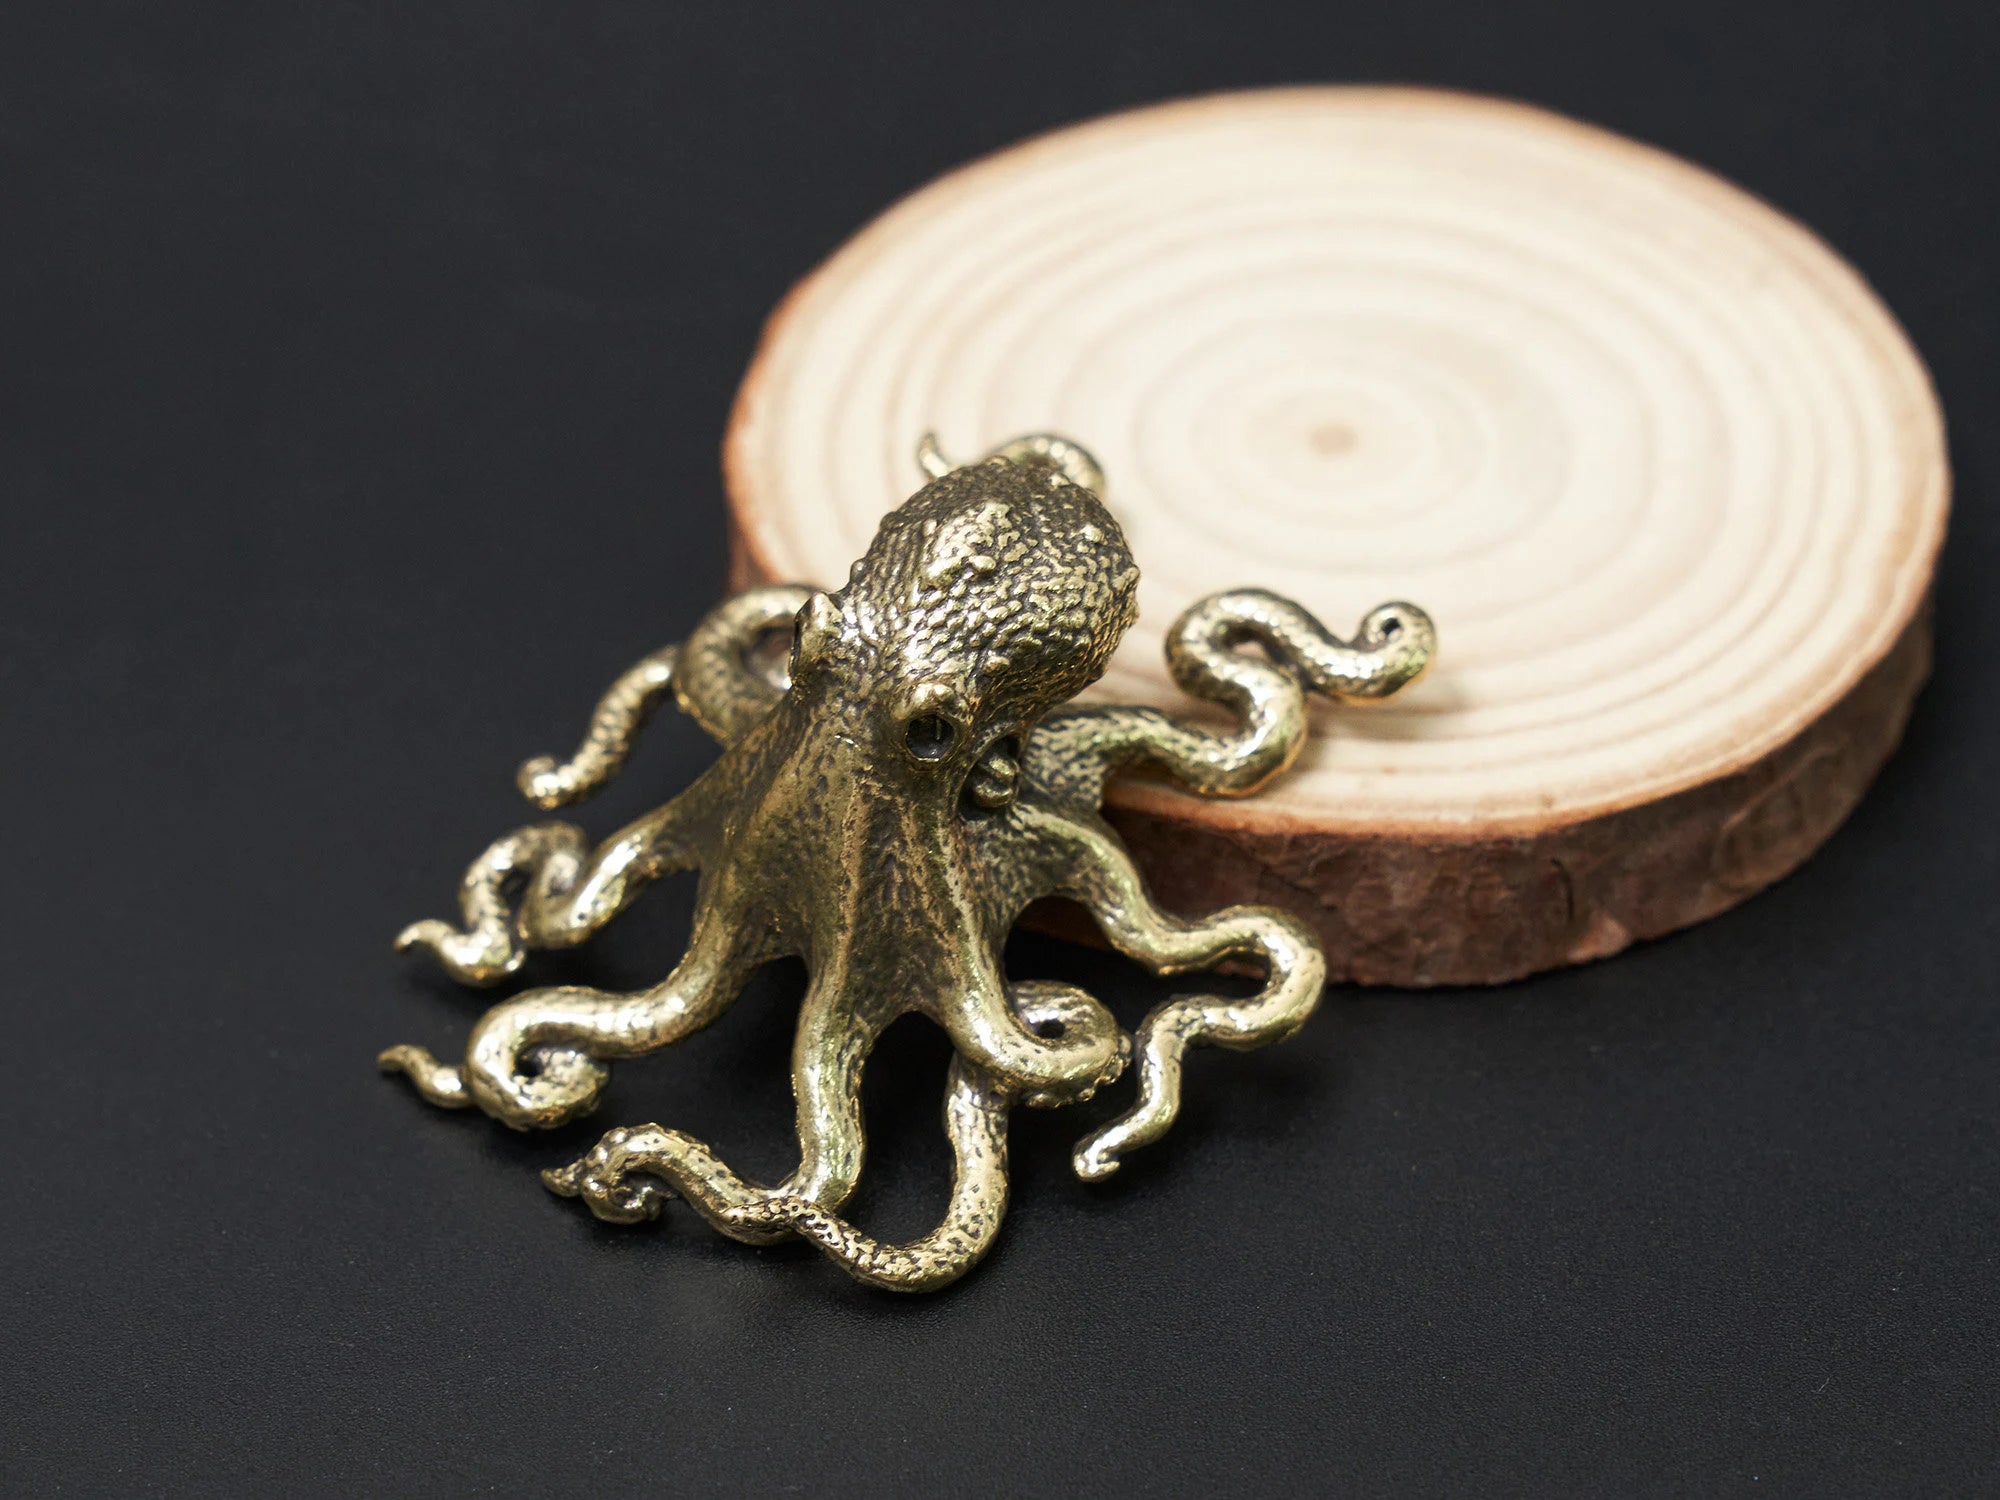 Mini Brass Octopus Statue Figurine Tiny Animal Gold Miniature Handmade Metal Art Desk Accessories Sculpture Paper Weight Gift for Her